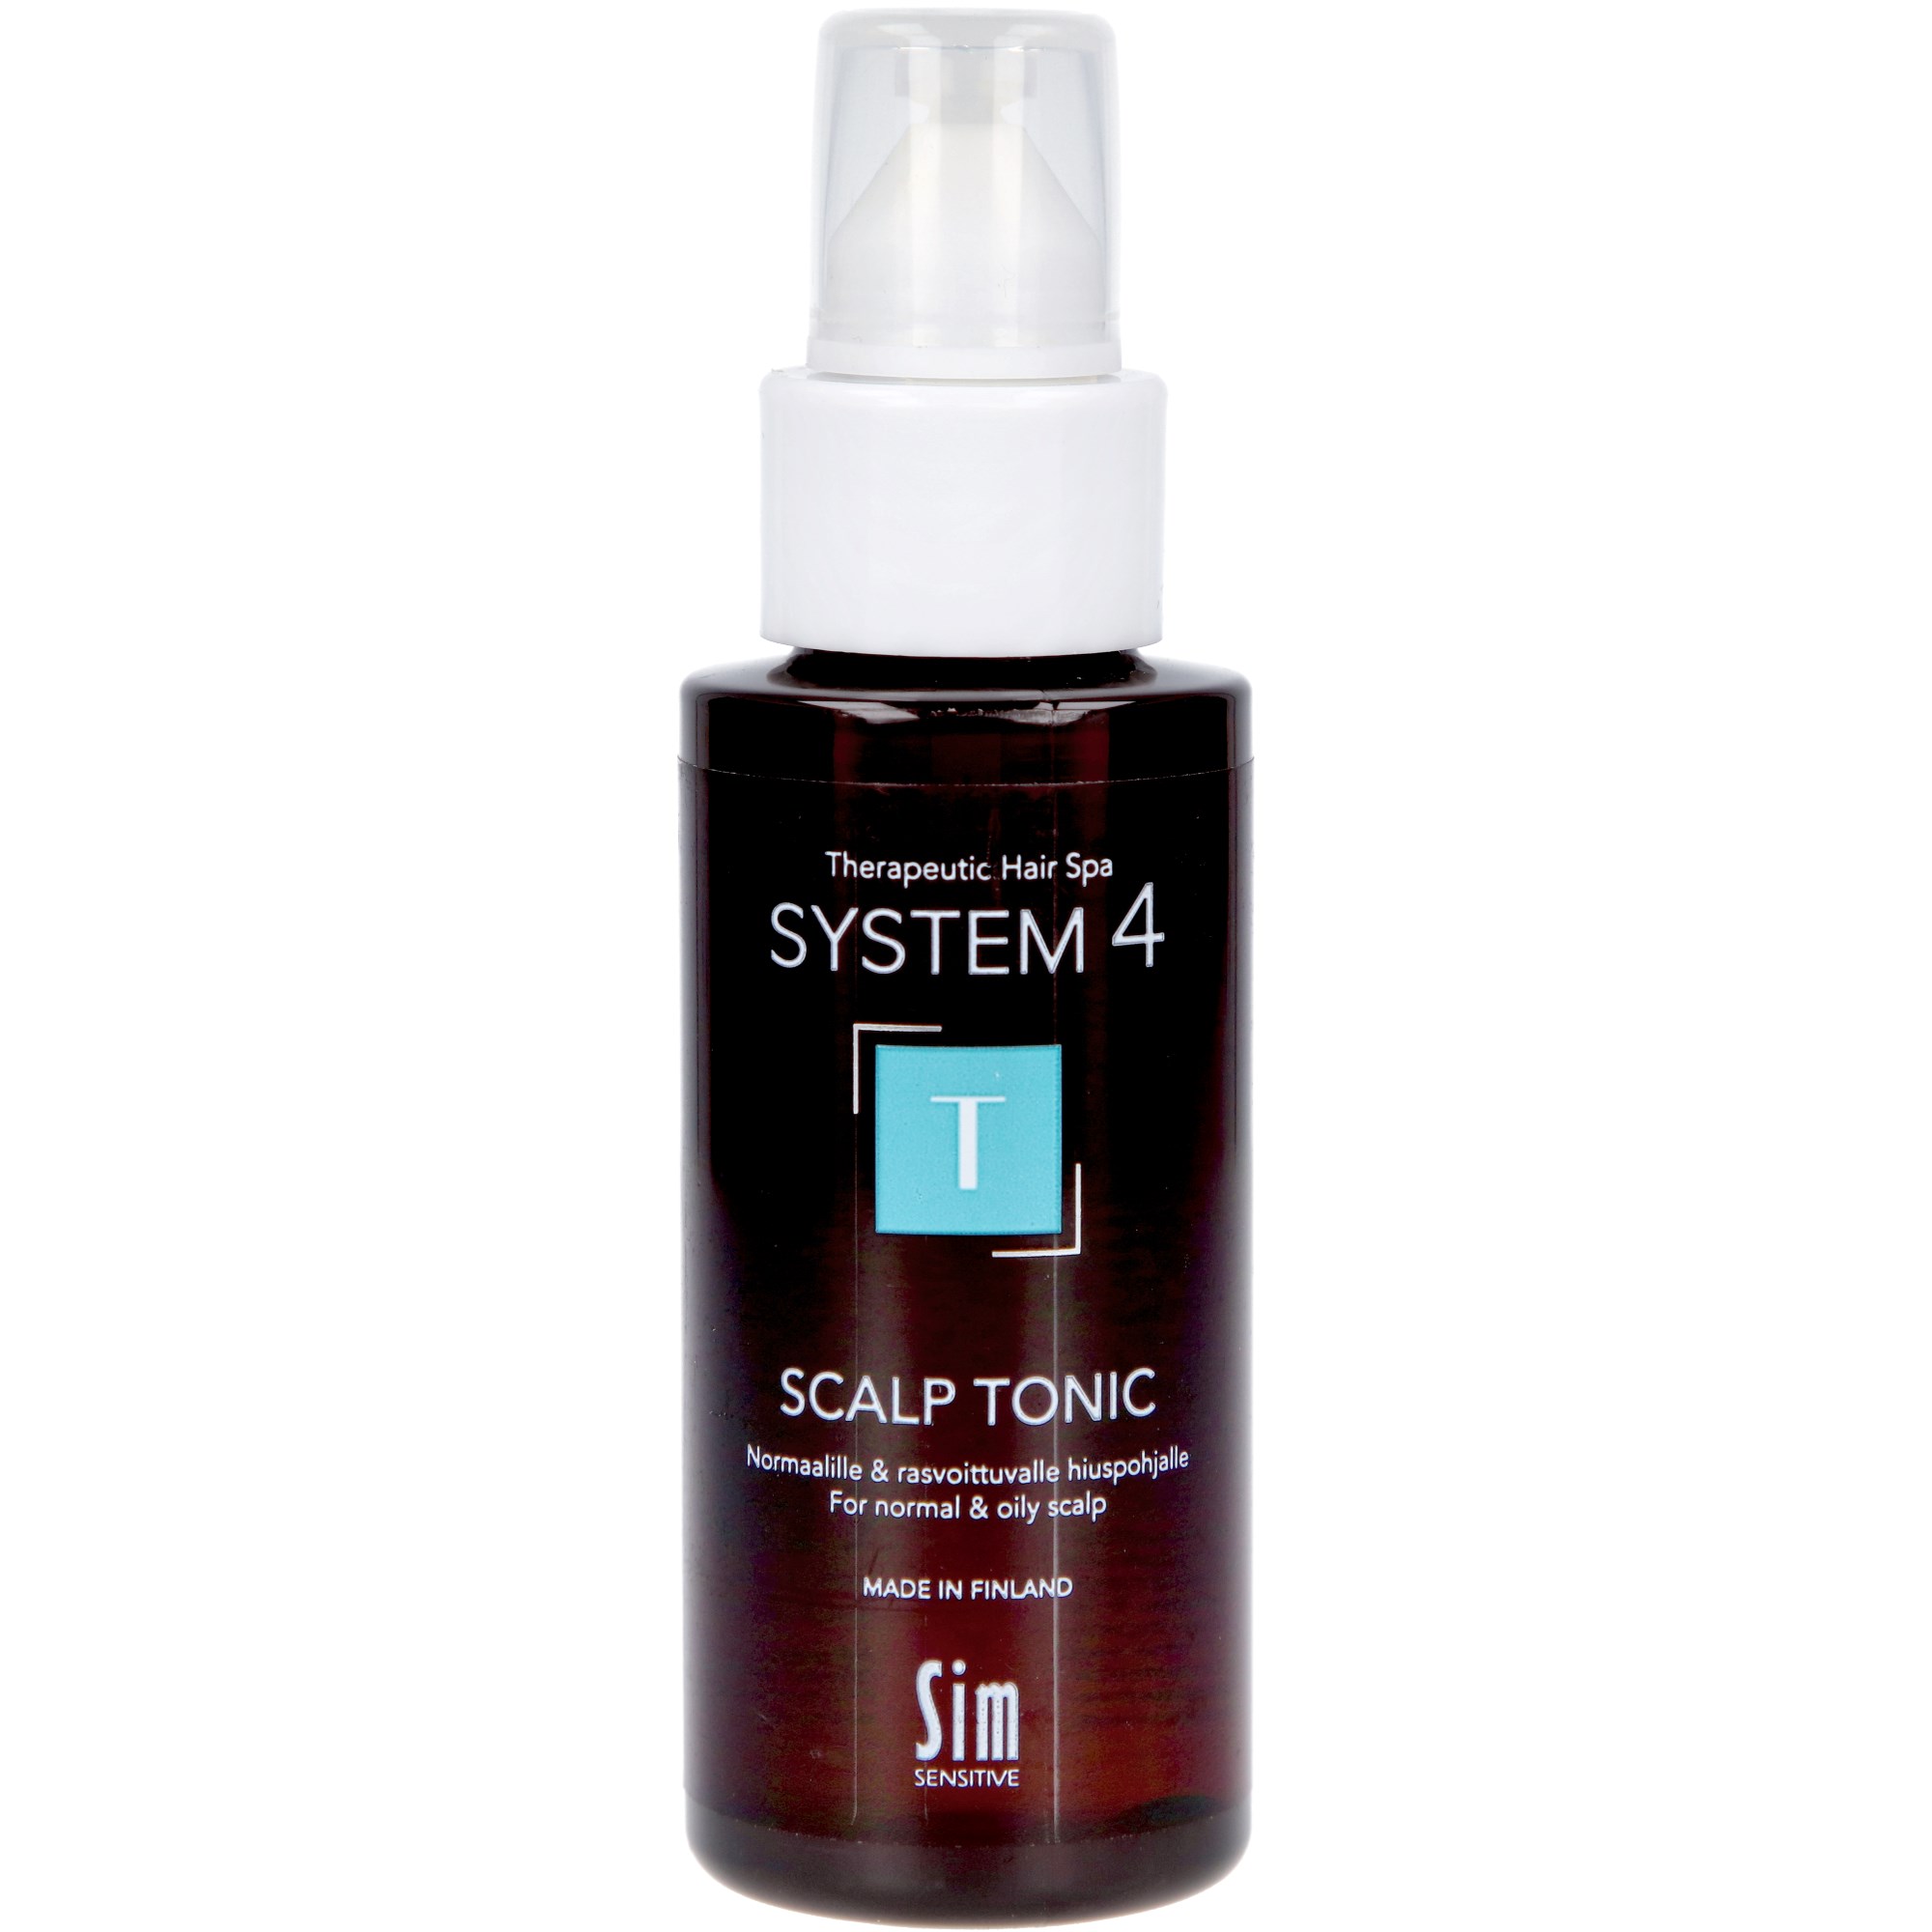 Sim Sensitive System 4 Scalp Tonic 50 ml